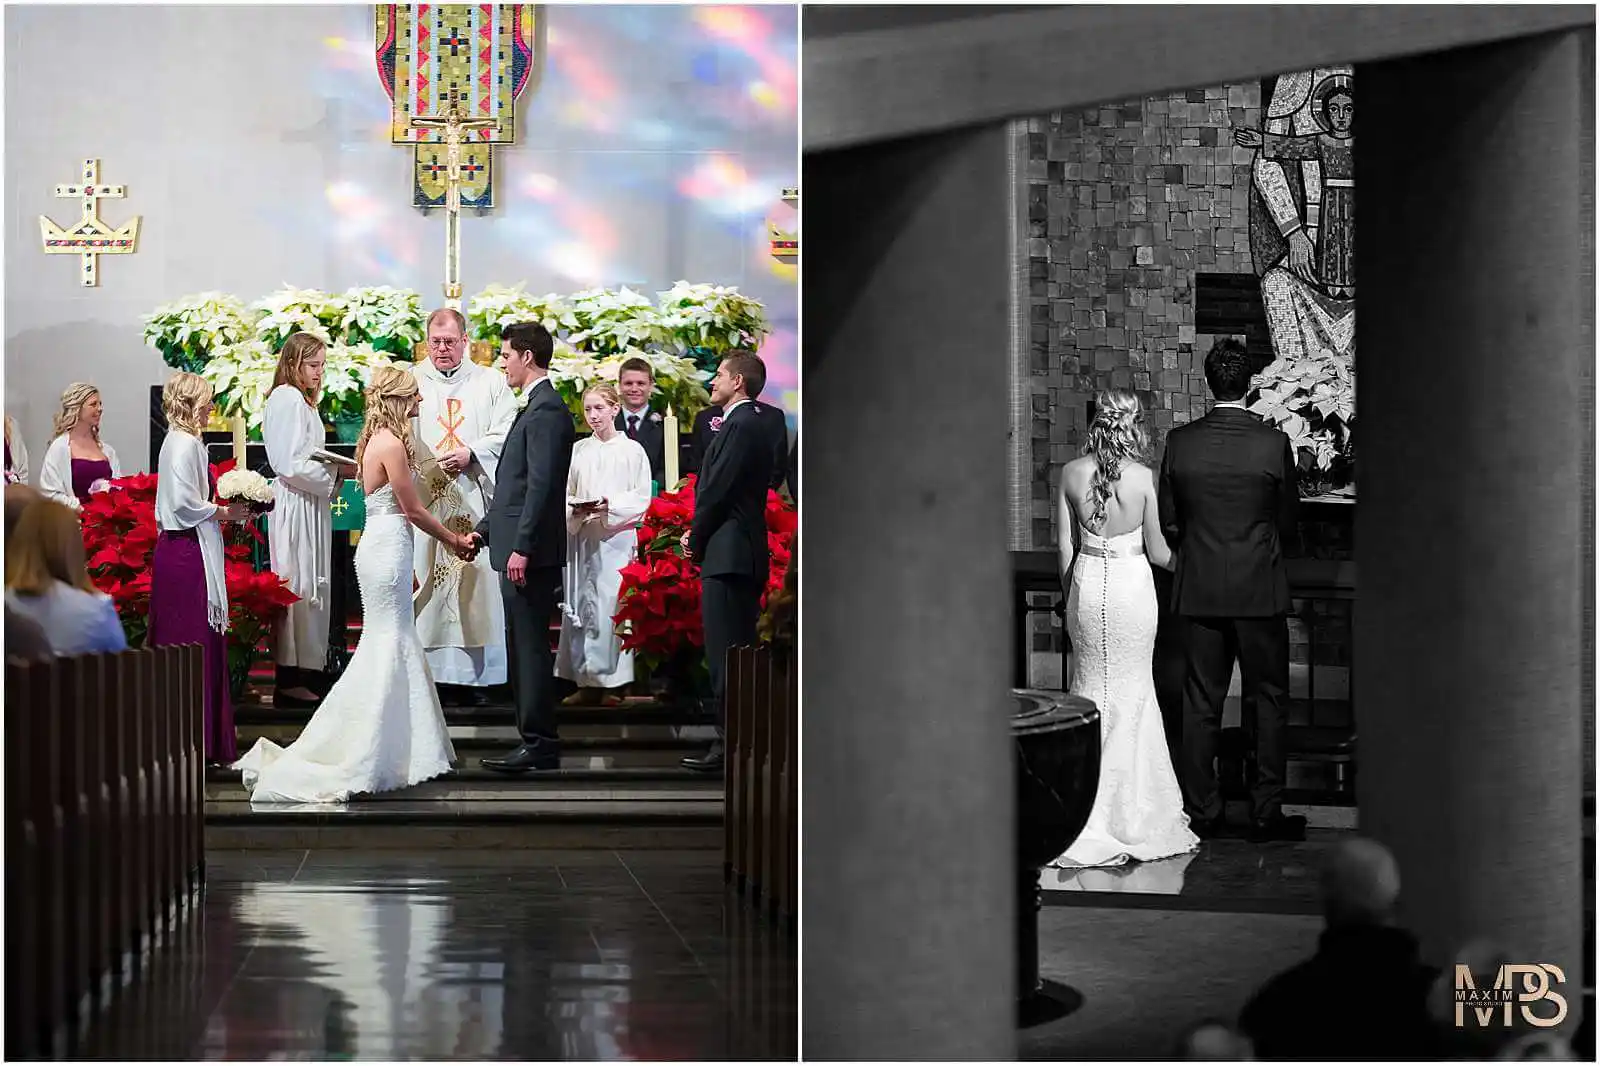 Cincinnati church wedding scene with elegantly dressed couple.